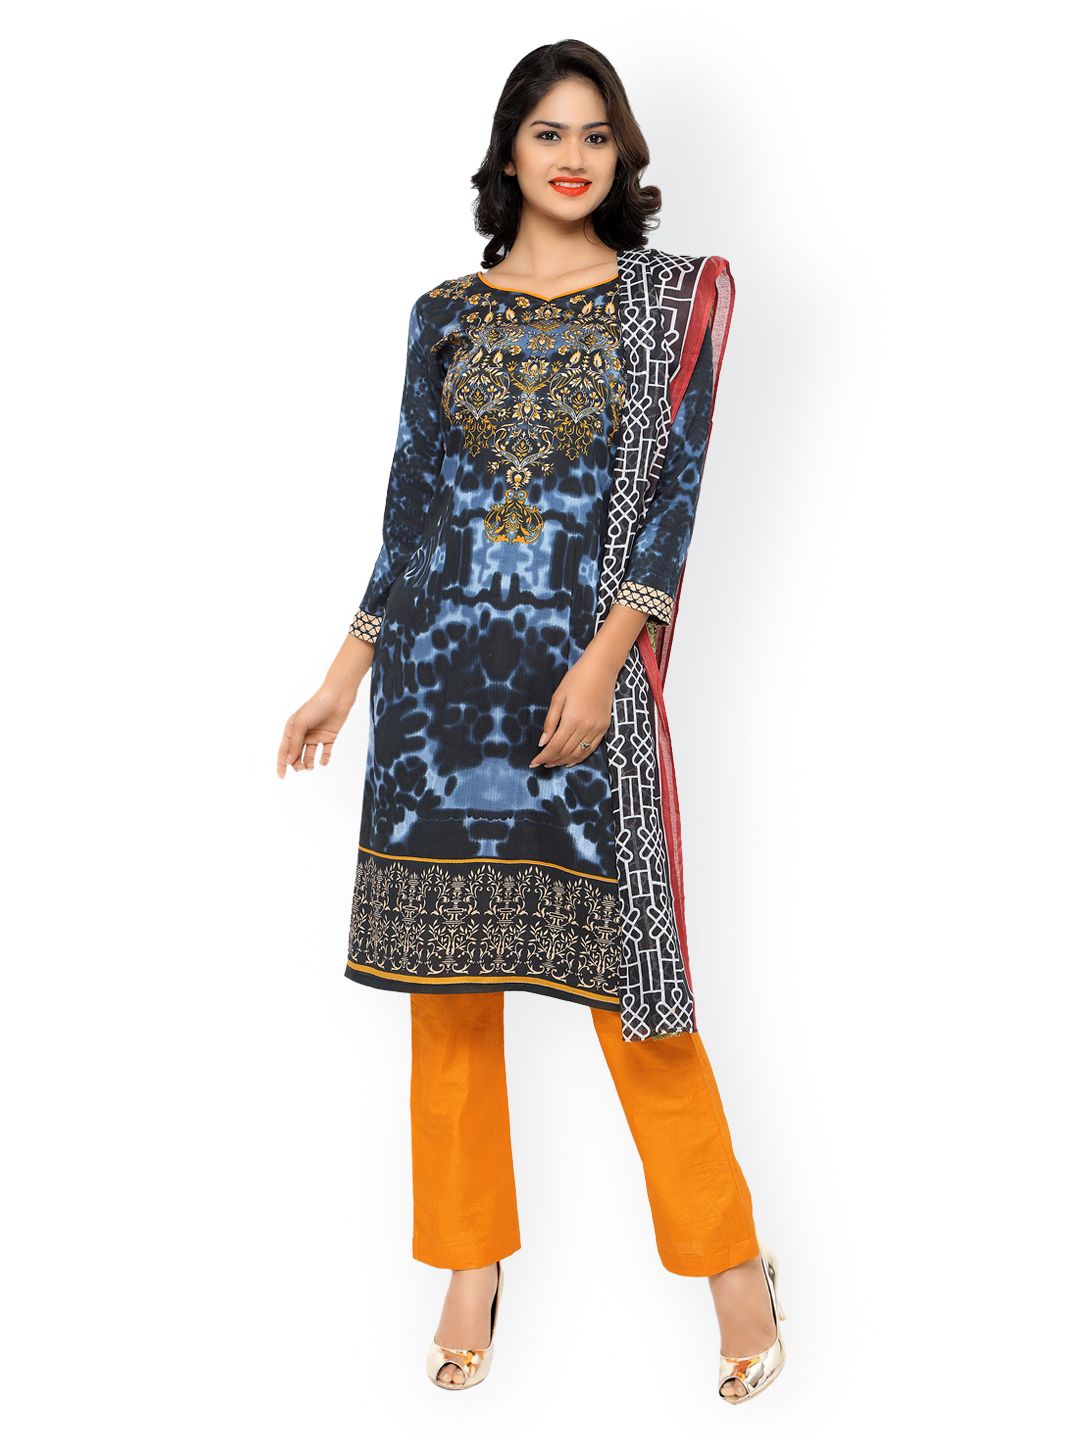 Kvsfab Black & Orange Printed Rayon Unstitched Dress Material Price in India